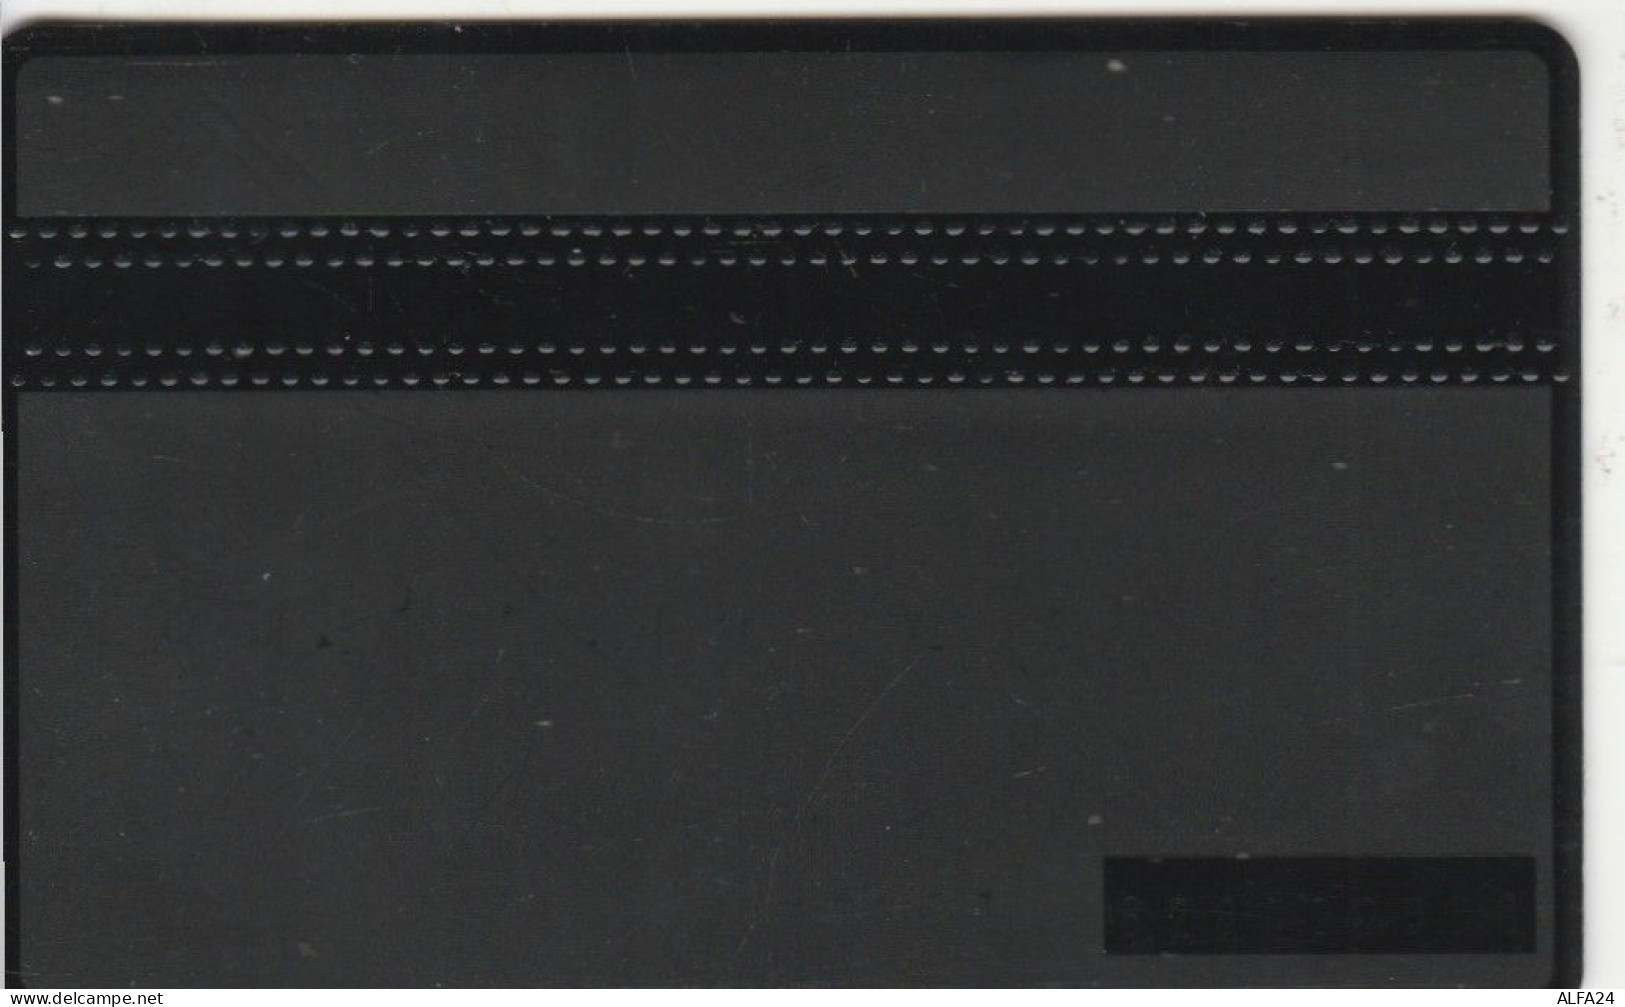 PHONE CARD BELGIO LANDIS (CK5713 - Senza Chip